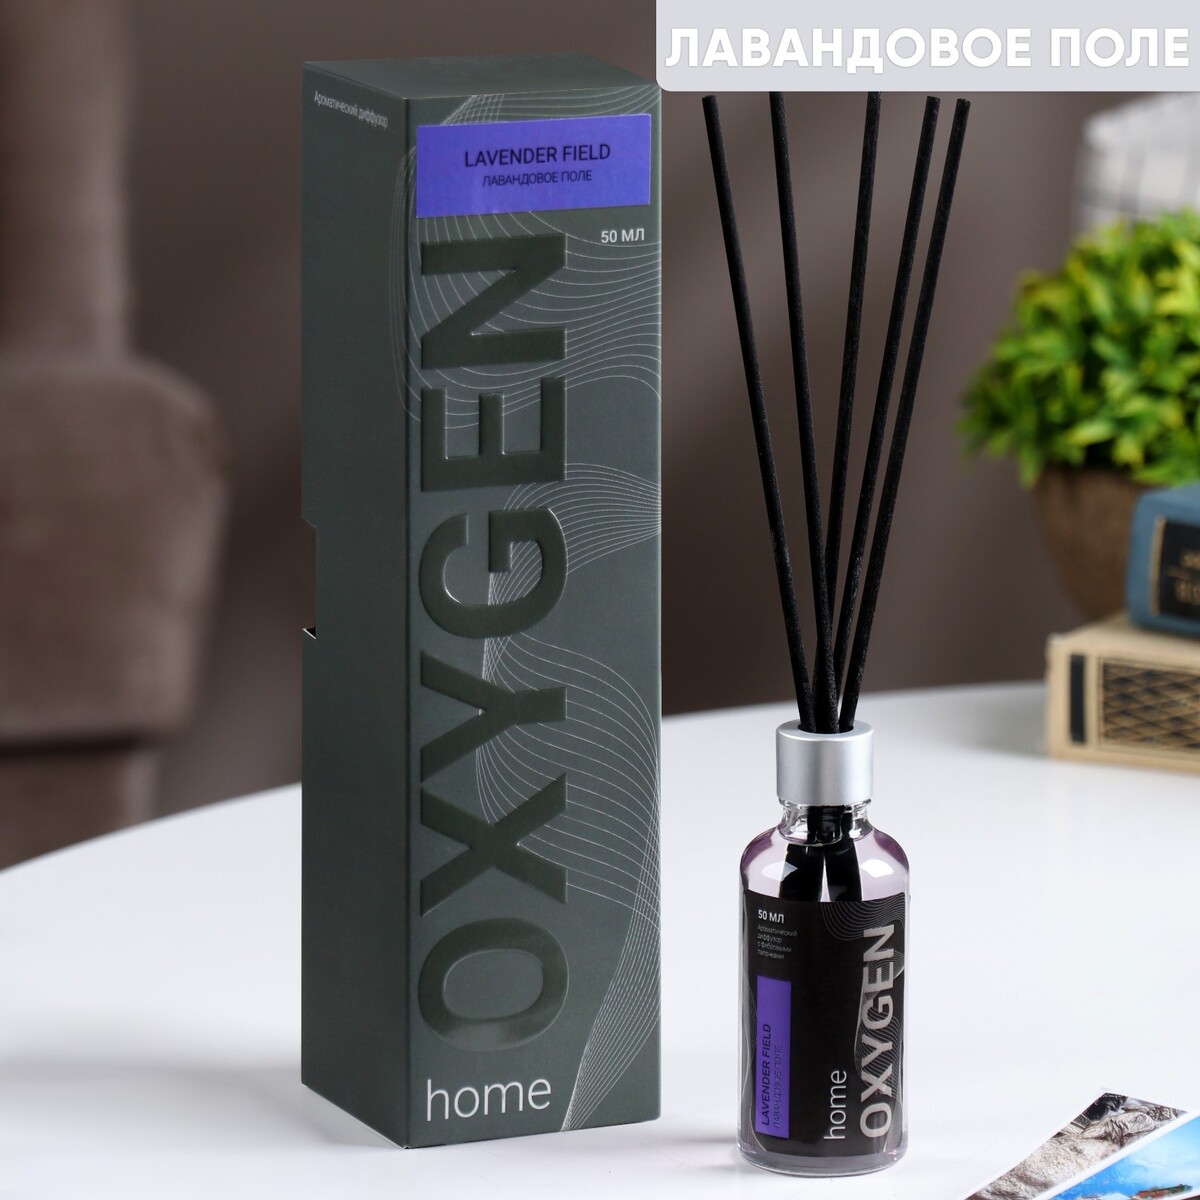   oxygen home